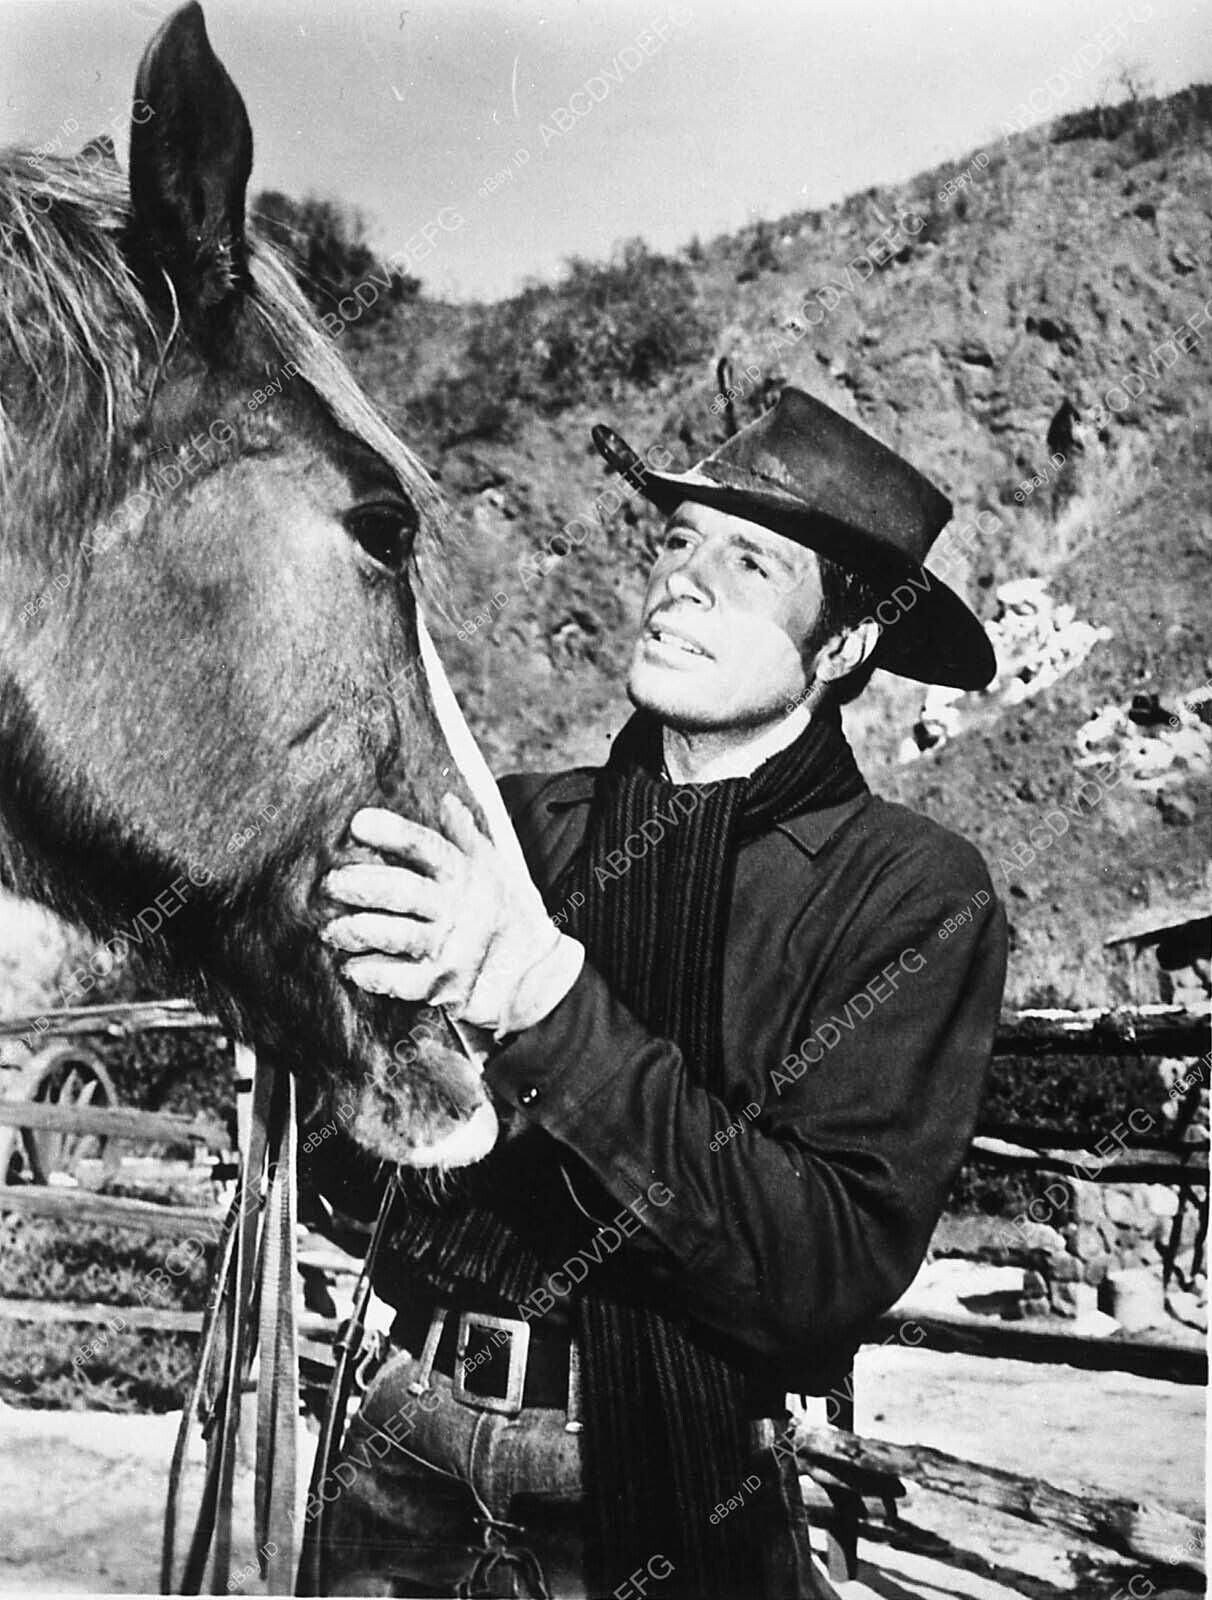 4109-015 Robert Horton petting his horse TV Wagon Train 4109-15 4109-015